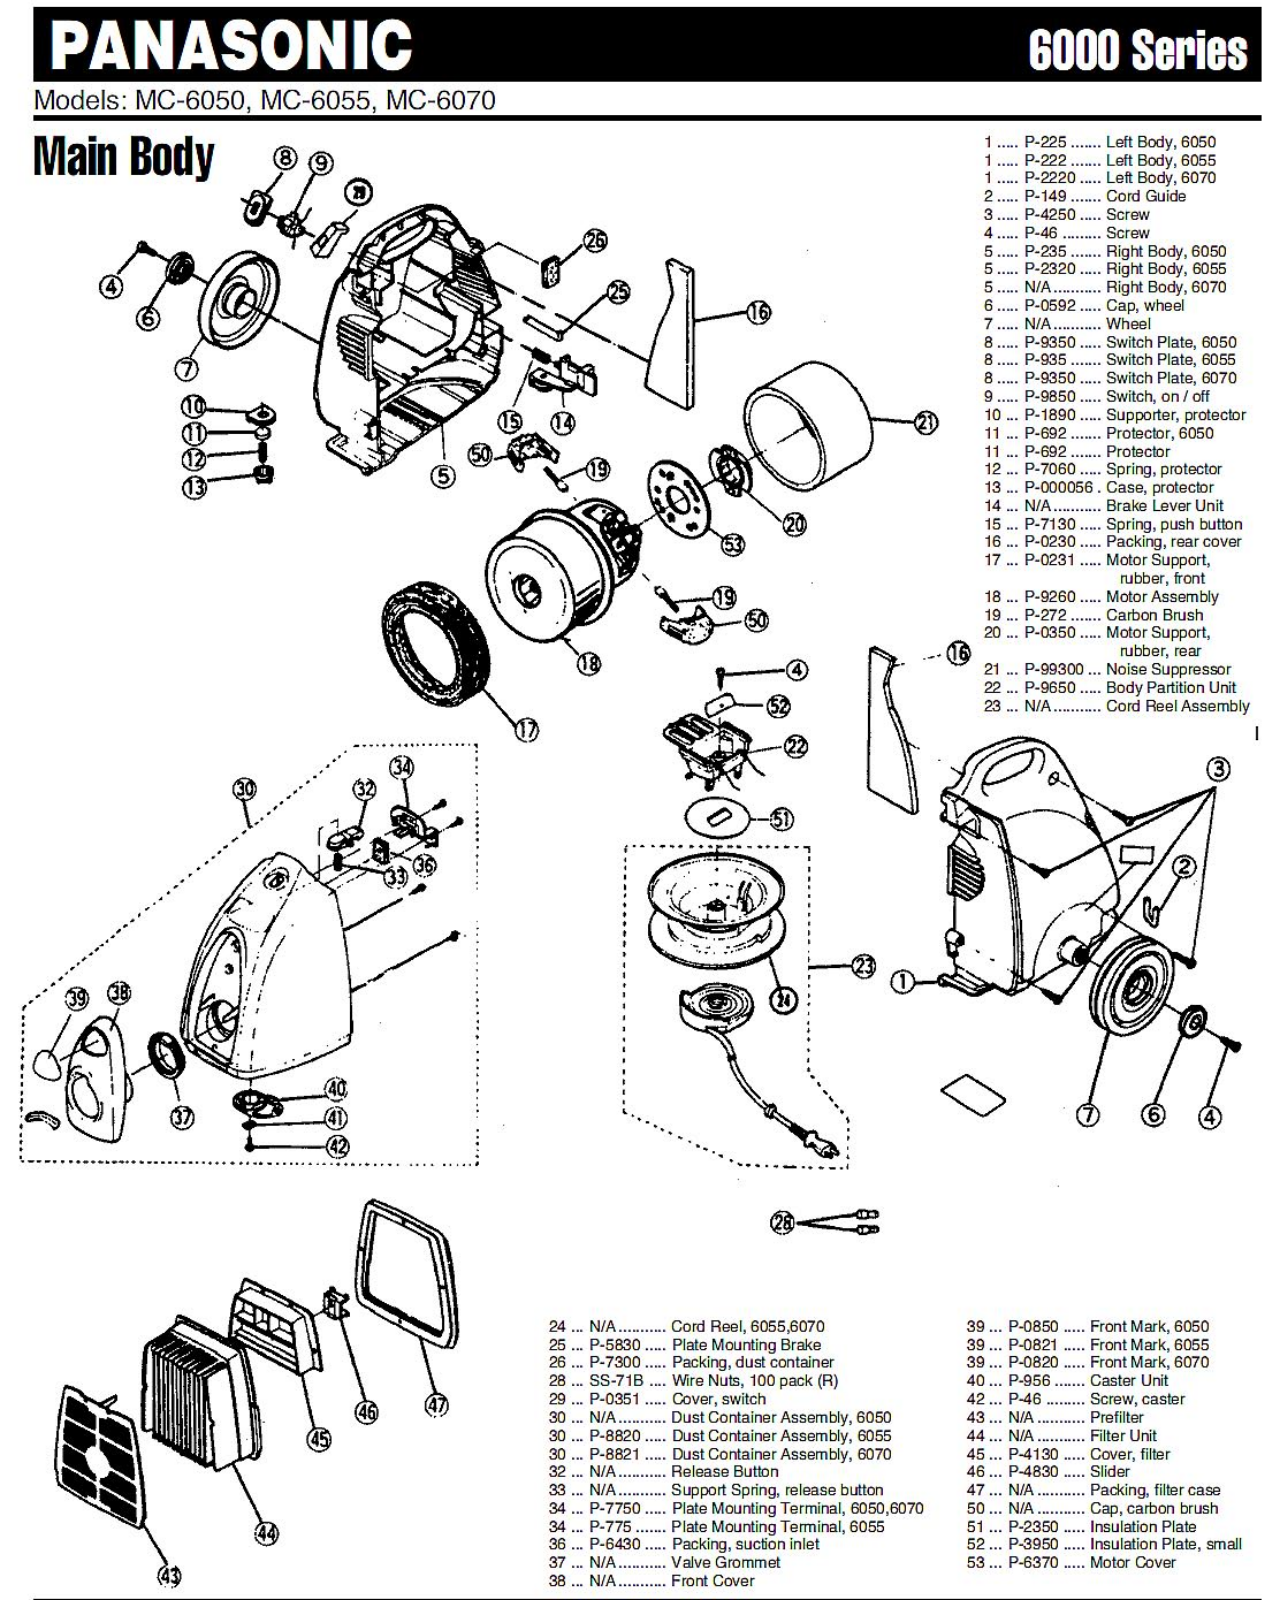 Panasonic 6050, 6070 Parts List